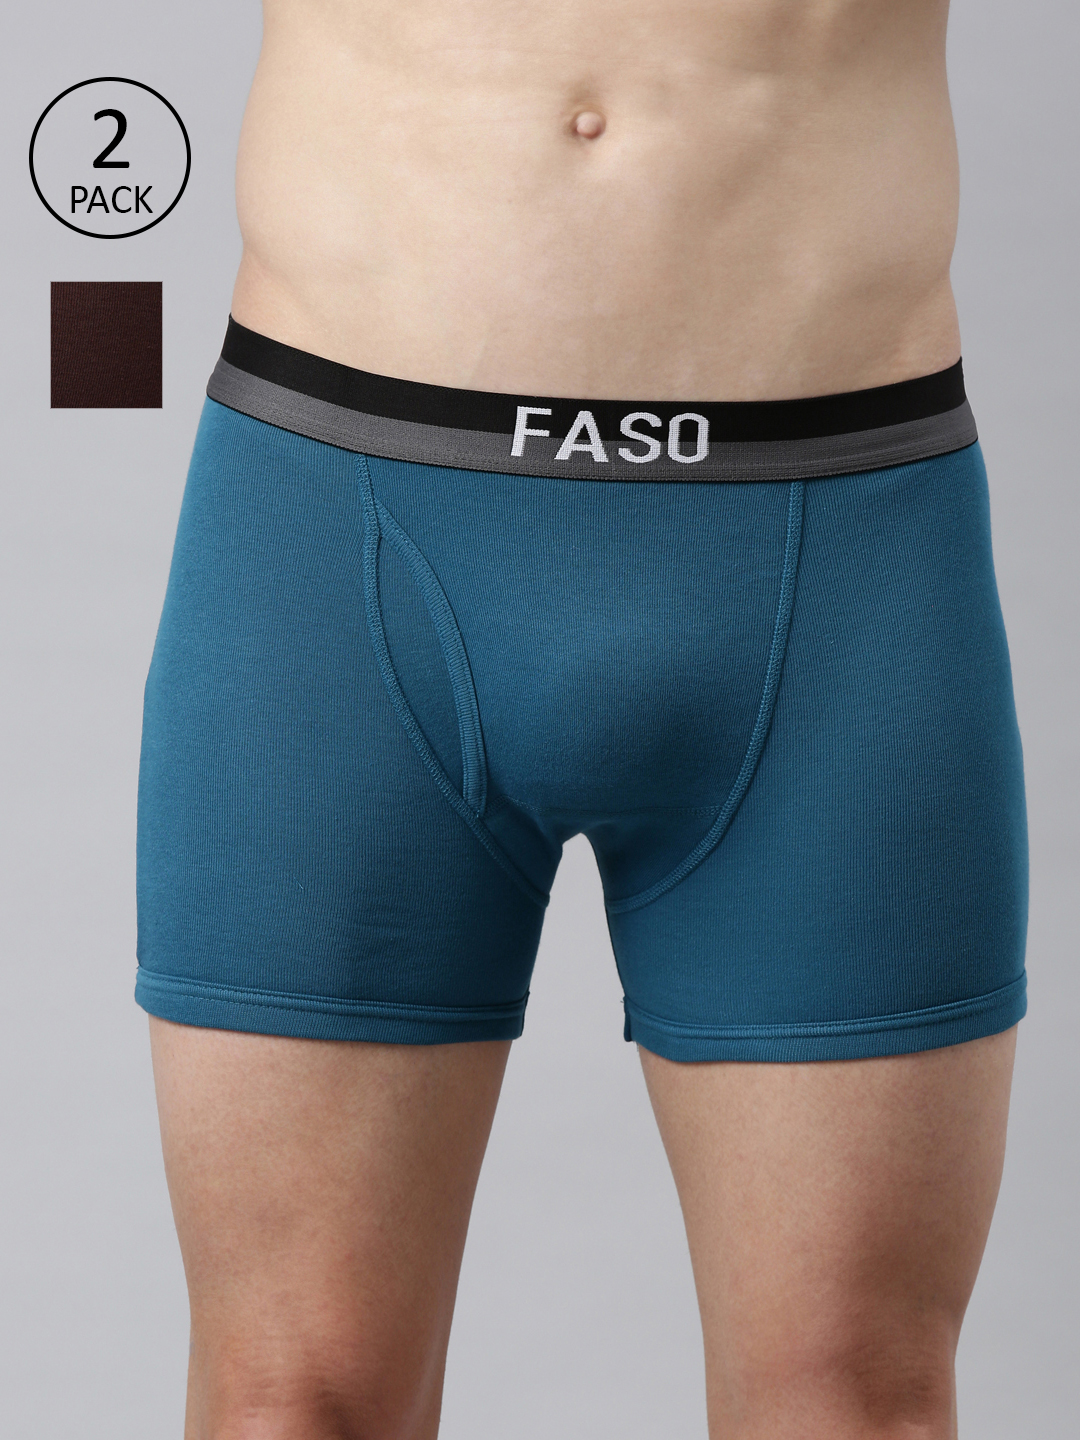 Buy FASO Printed Trunks Online, Comfort stretch fabricBuy 4-Way Stretch  Cotton Trunk FS 3007